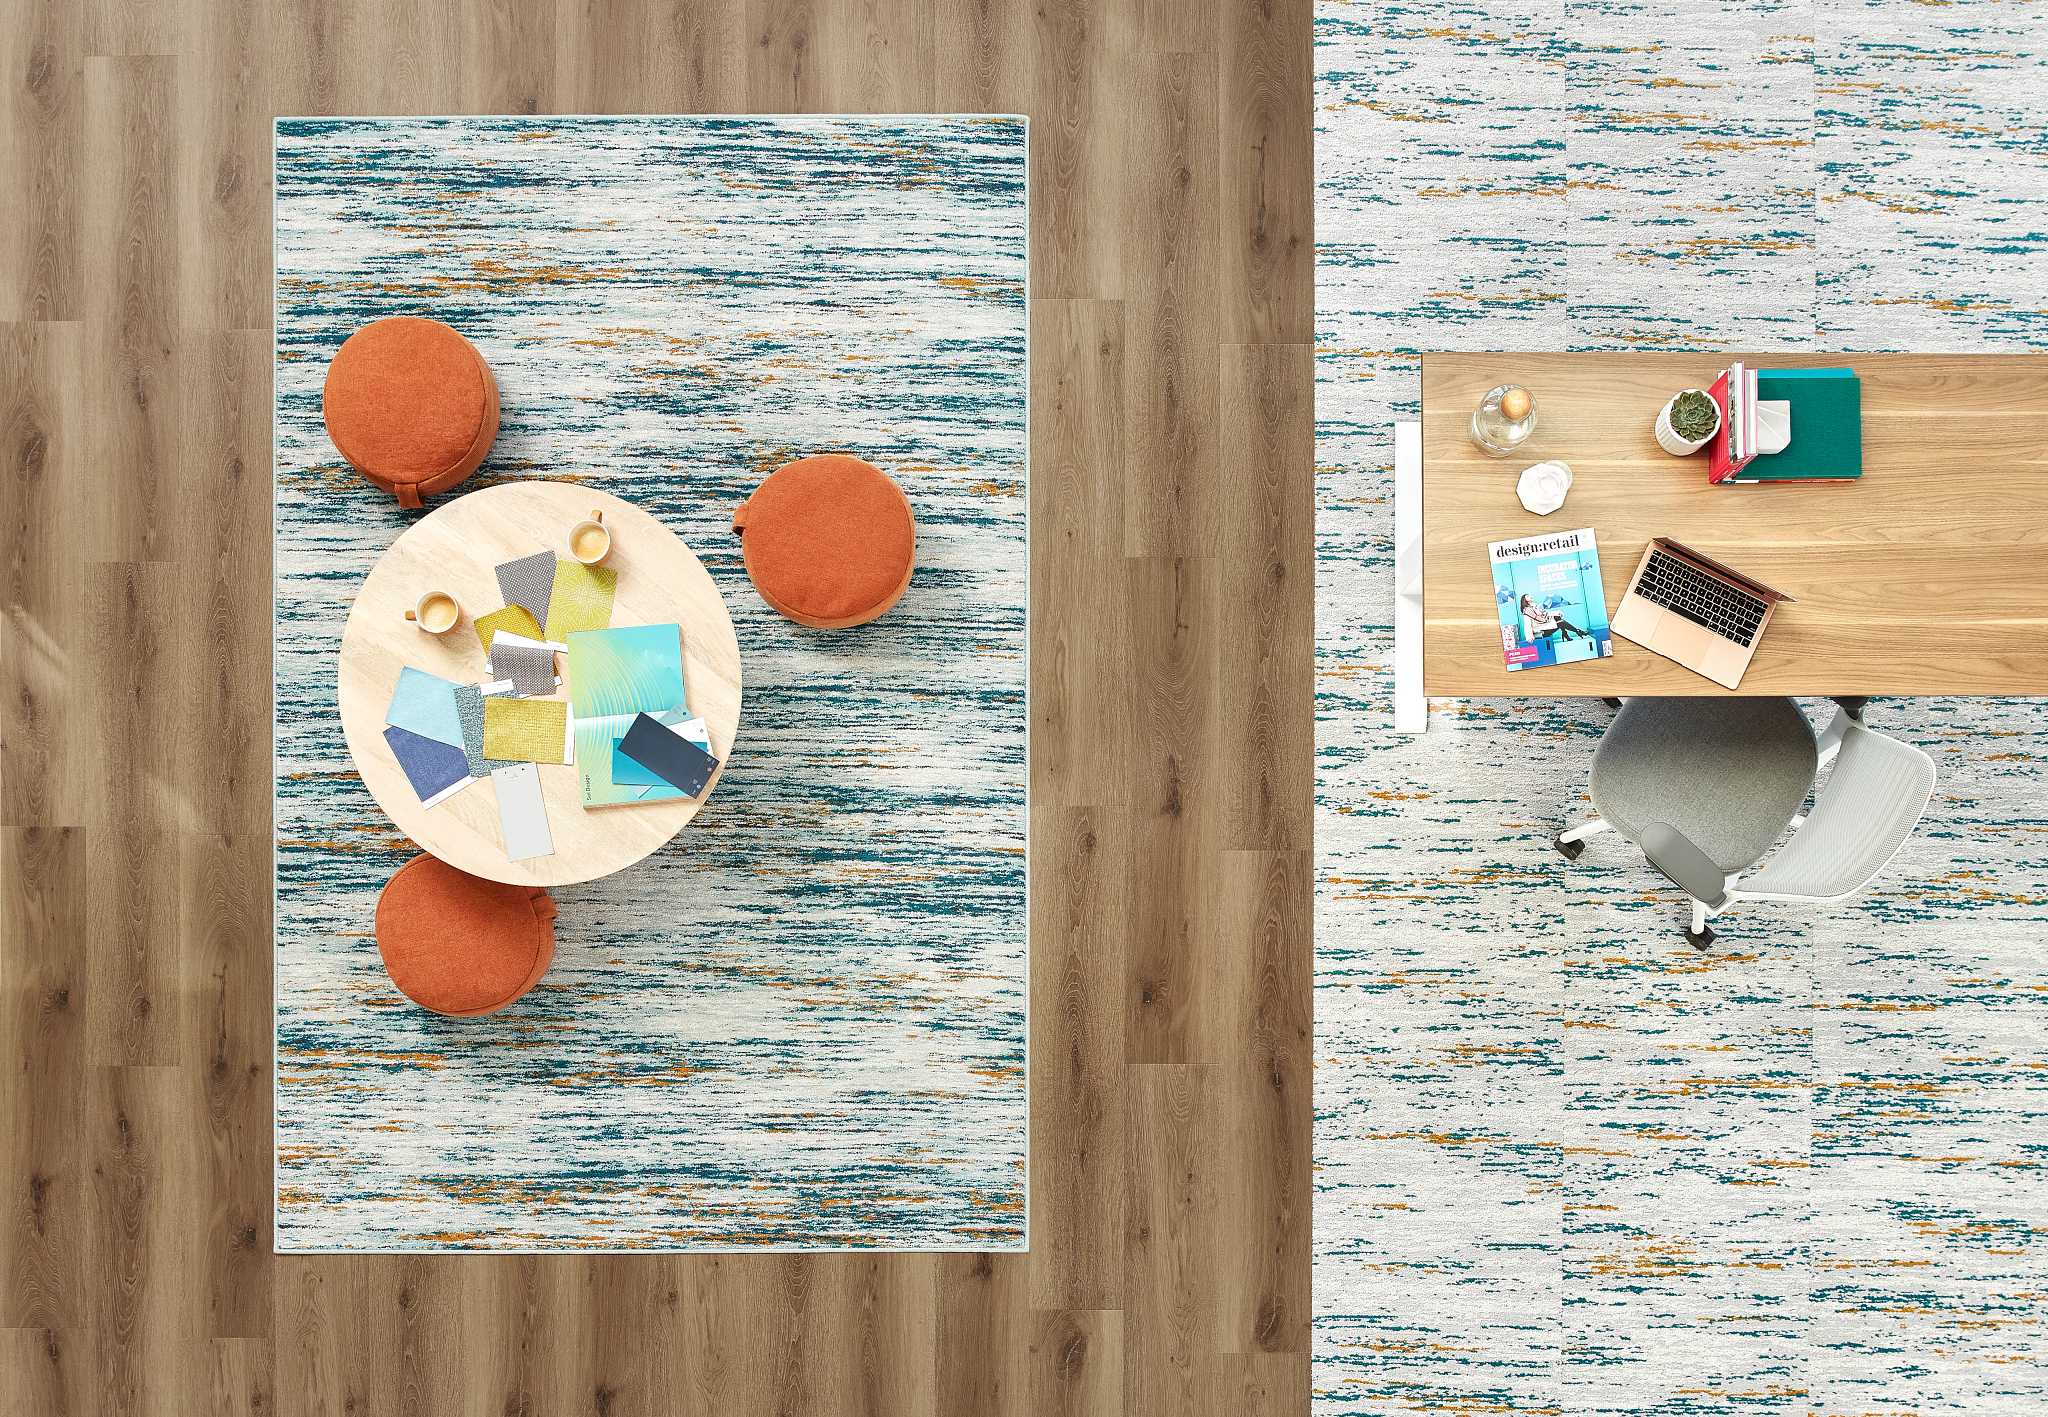 Verve 6×9 FT Rug na cor Vibrance + Zeal Carpet Tile na cor Vibrance-Color + Inlet II na cor Thatch